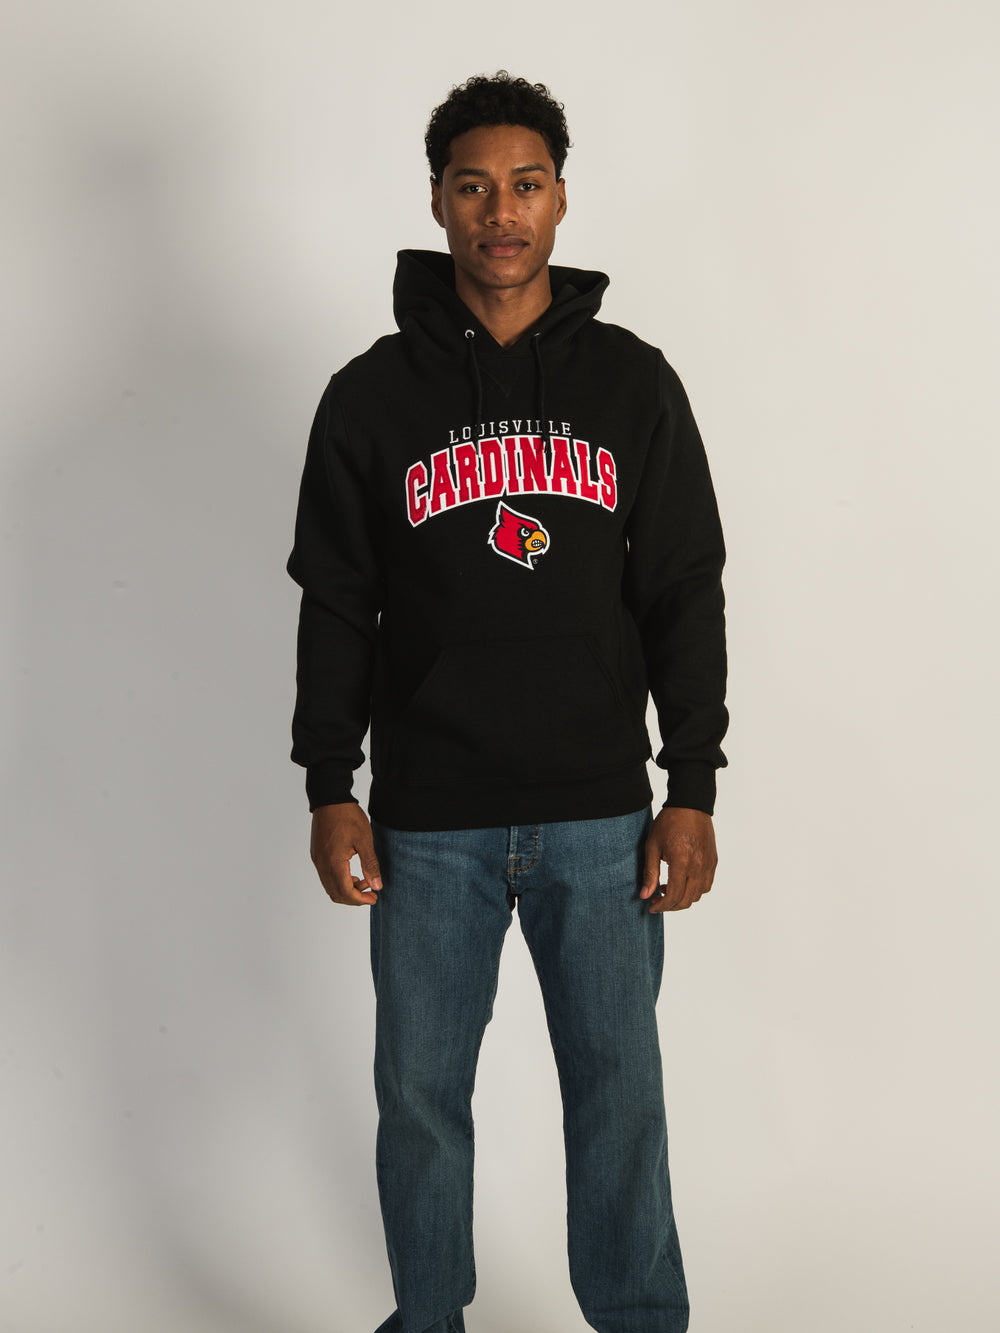 Russell University of Louisville Cardinals Gray T-Shirt Men's Size L